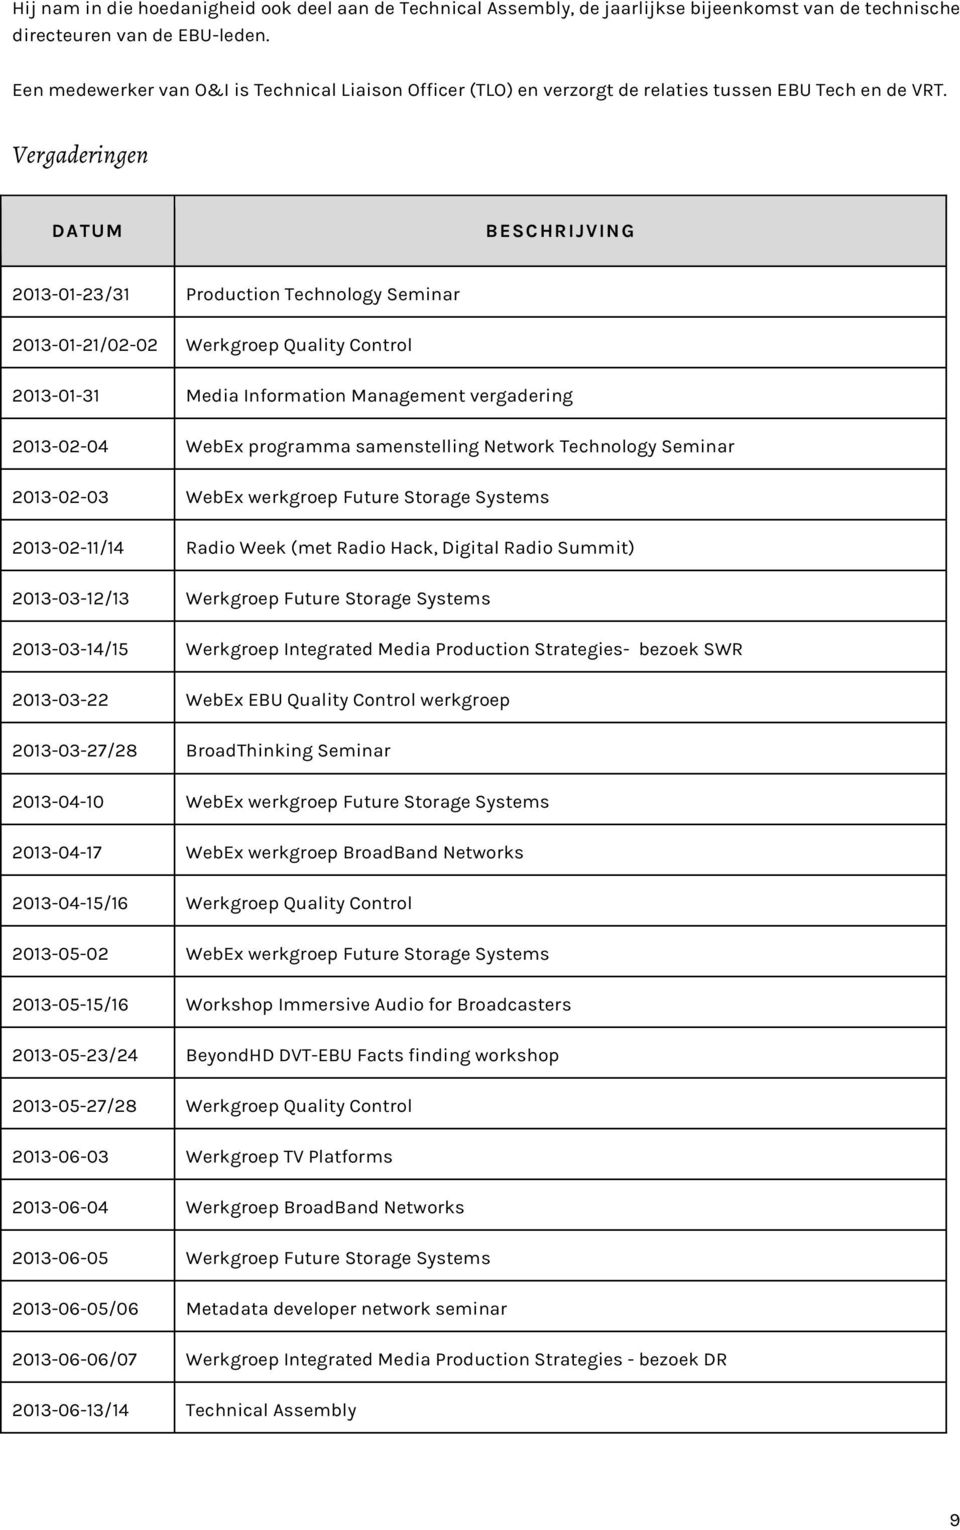 Vergaderingen DATUM BESCHRIJVING 2013-01-23/31 Production Technology Seminar 2013-01-21/02-02 Werkgroep Quality Control 2013-01-31 Media Information Management vergadering 2013-02-04 WebEx programma